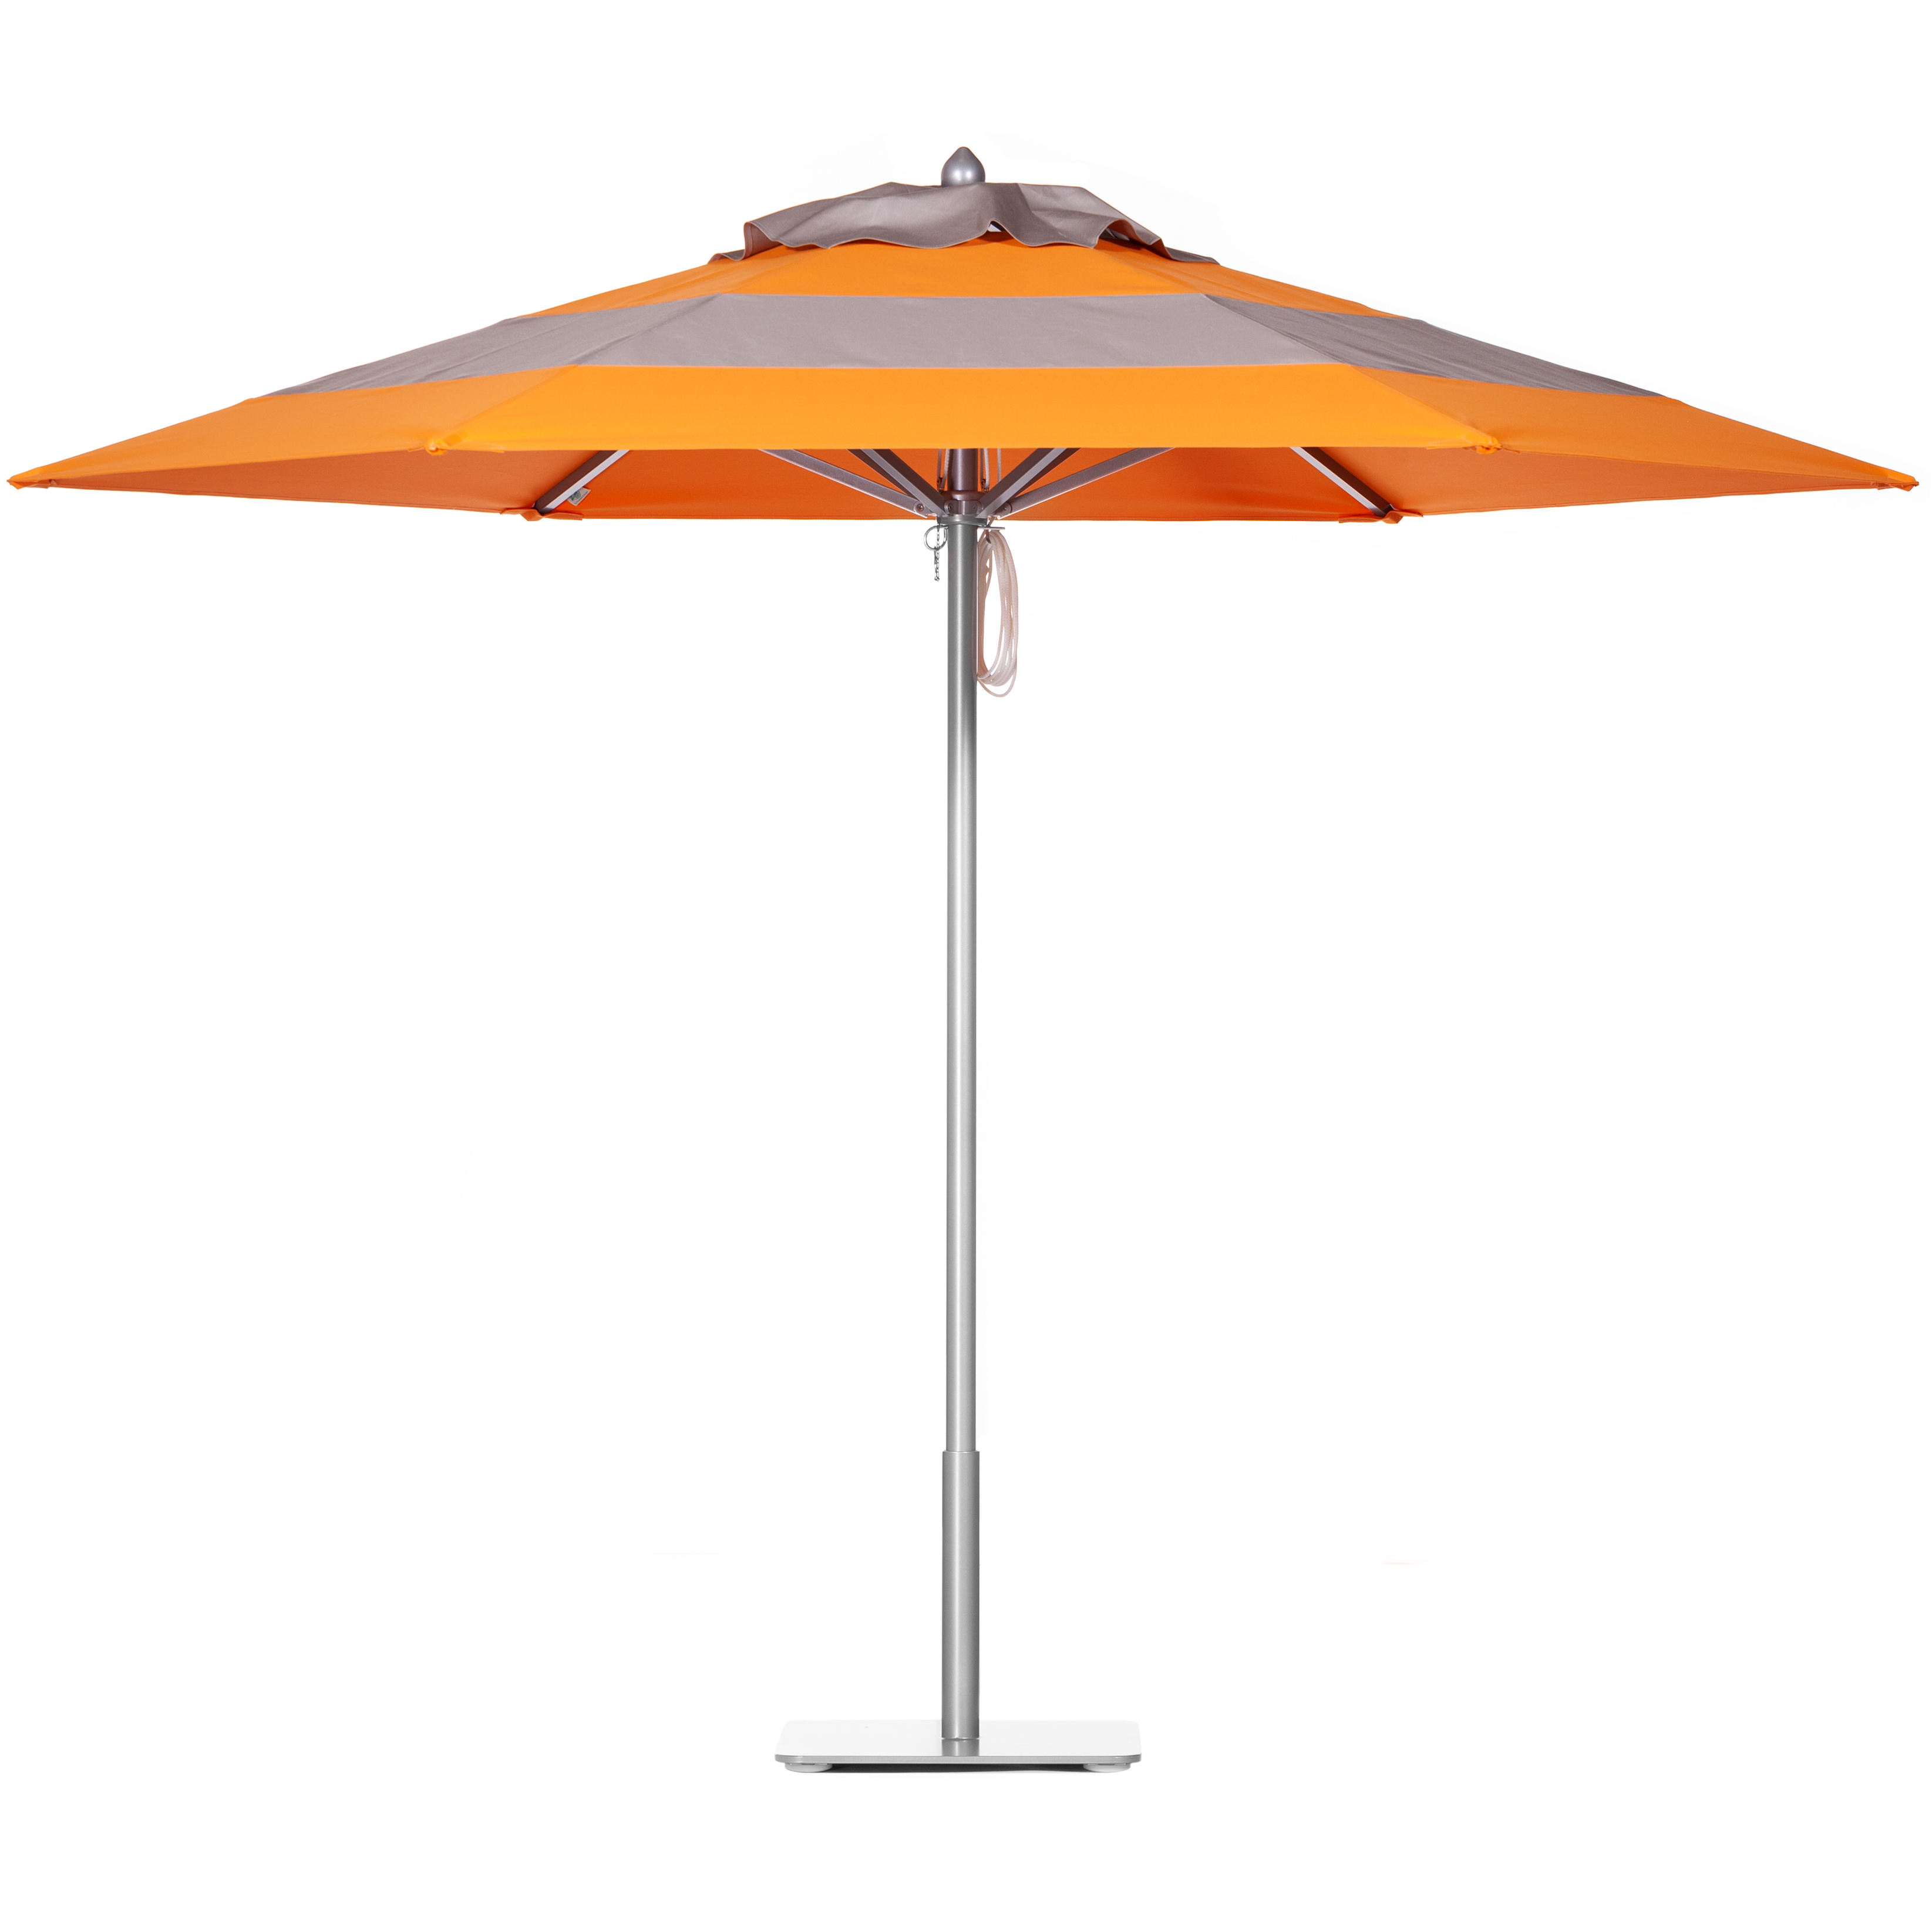 Tango Orange & Cadet Grey Umbrella Image